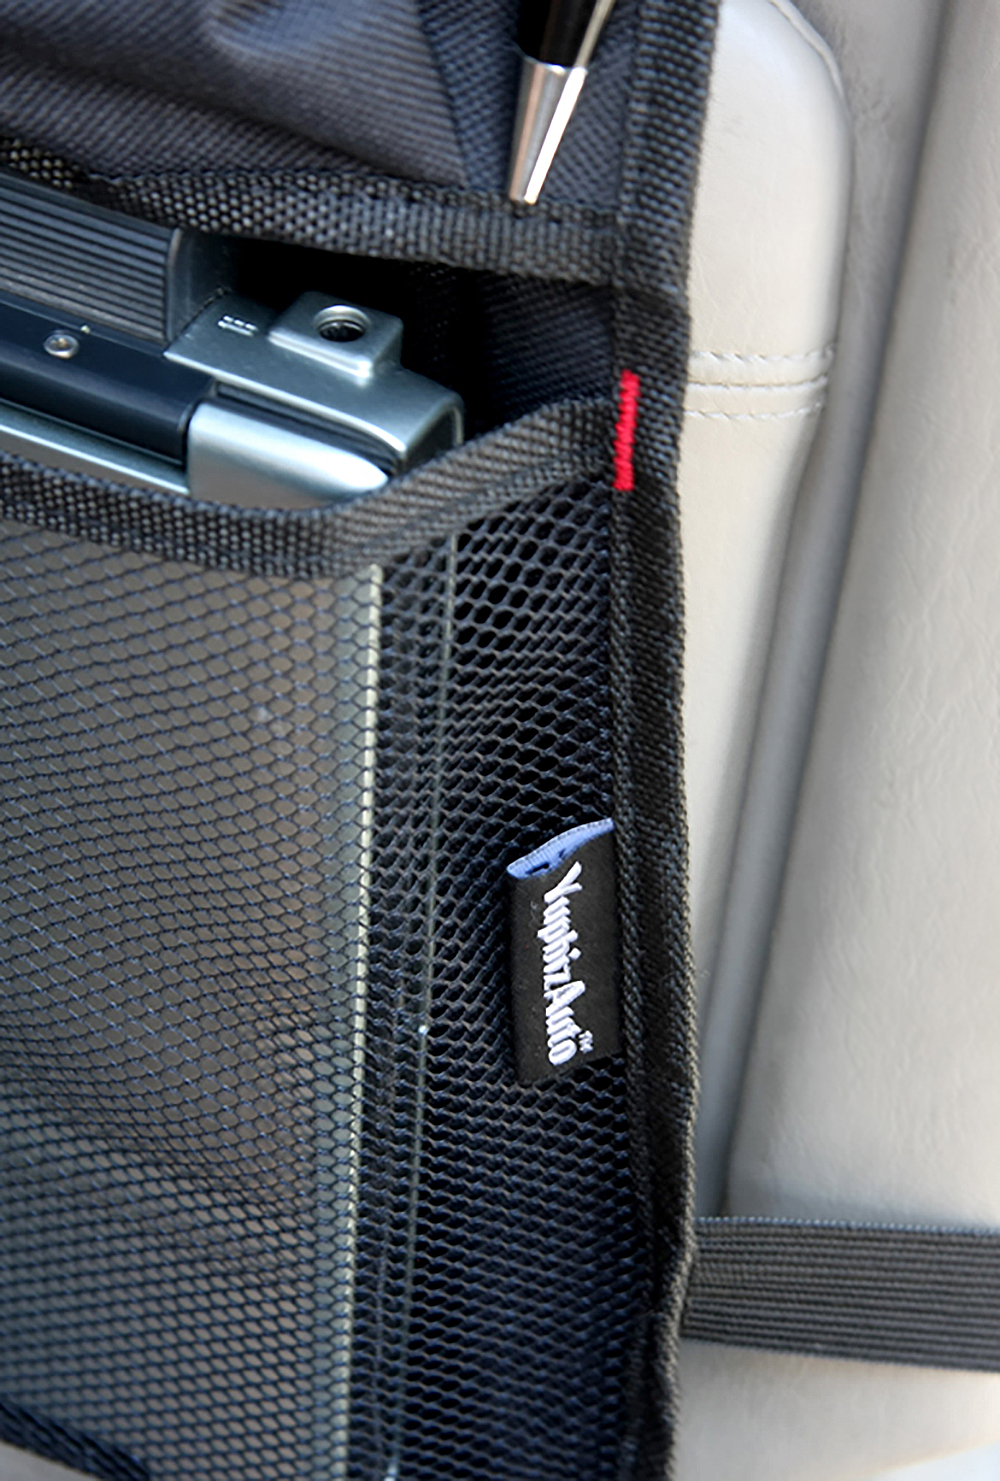 YupbizAuto Car Auto Front/Back Seat Organizer Cell Phone Holder Multi-Pocket Travel Storage Bag, Black Color - image 4 of 6